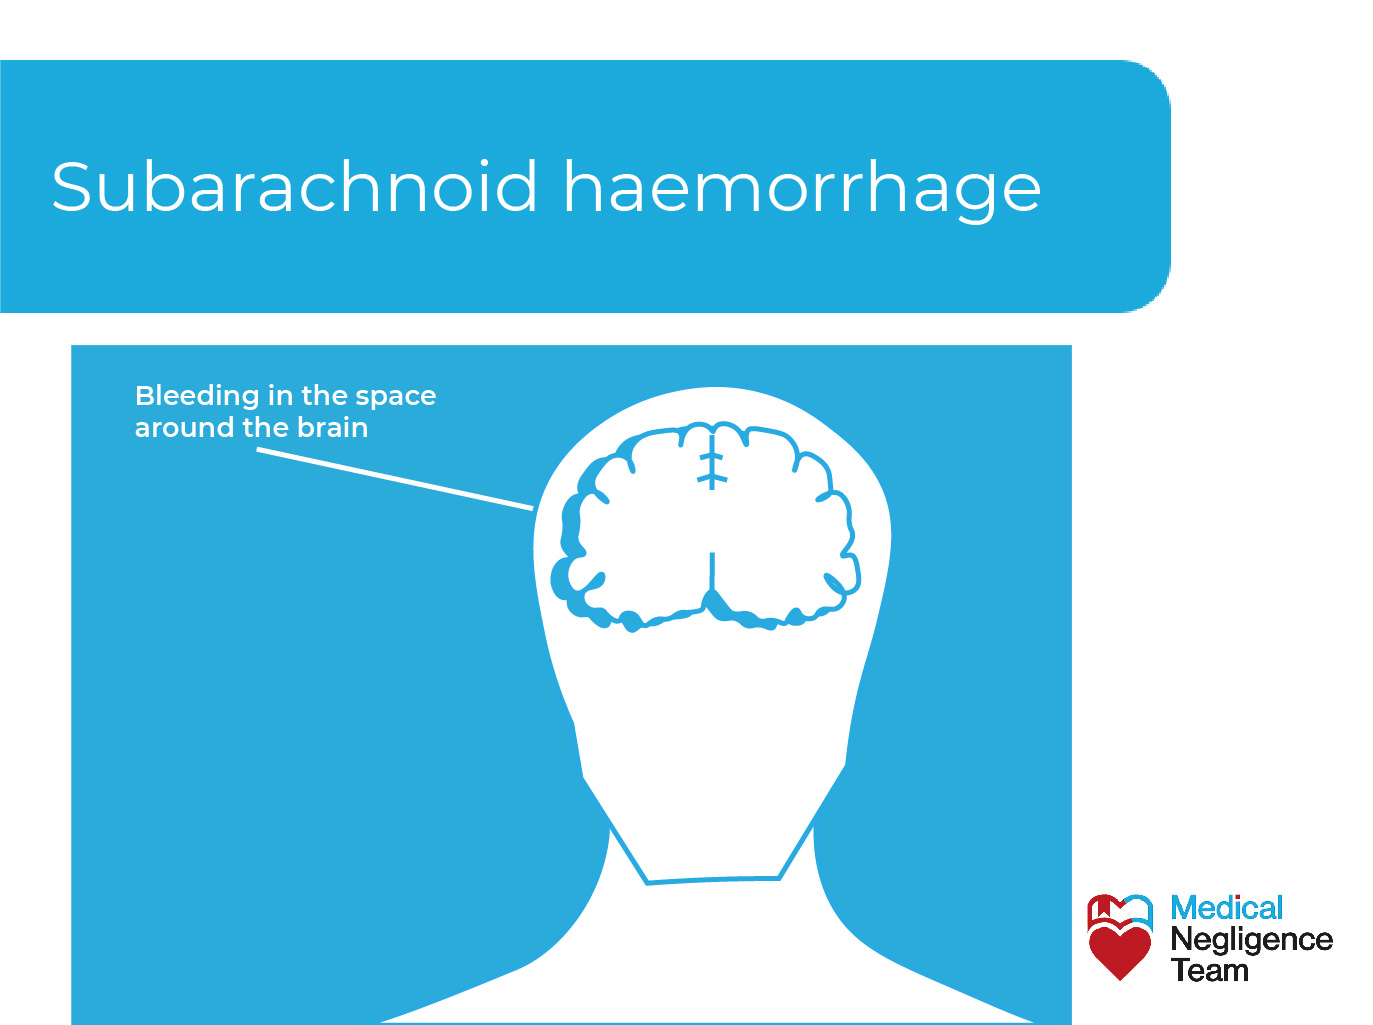 Subarachnoid haemorrhage misdiagnosis claim